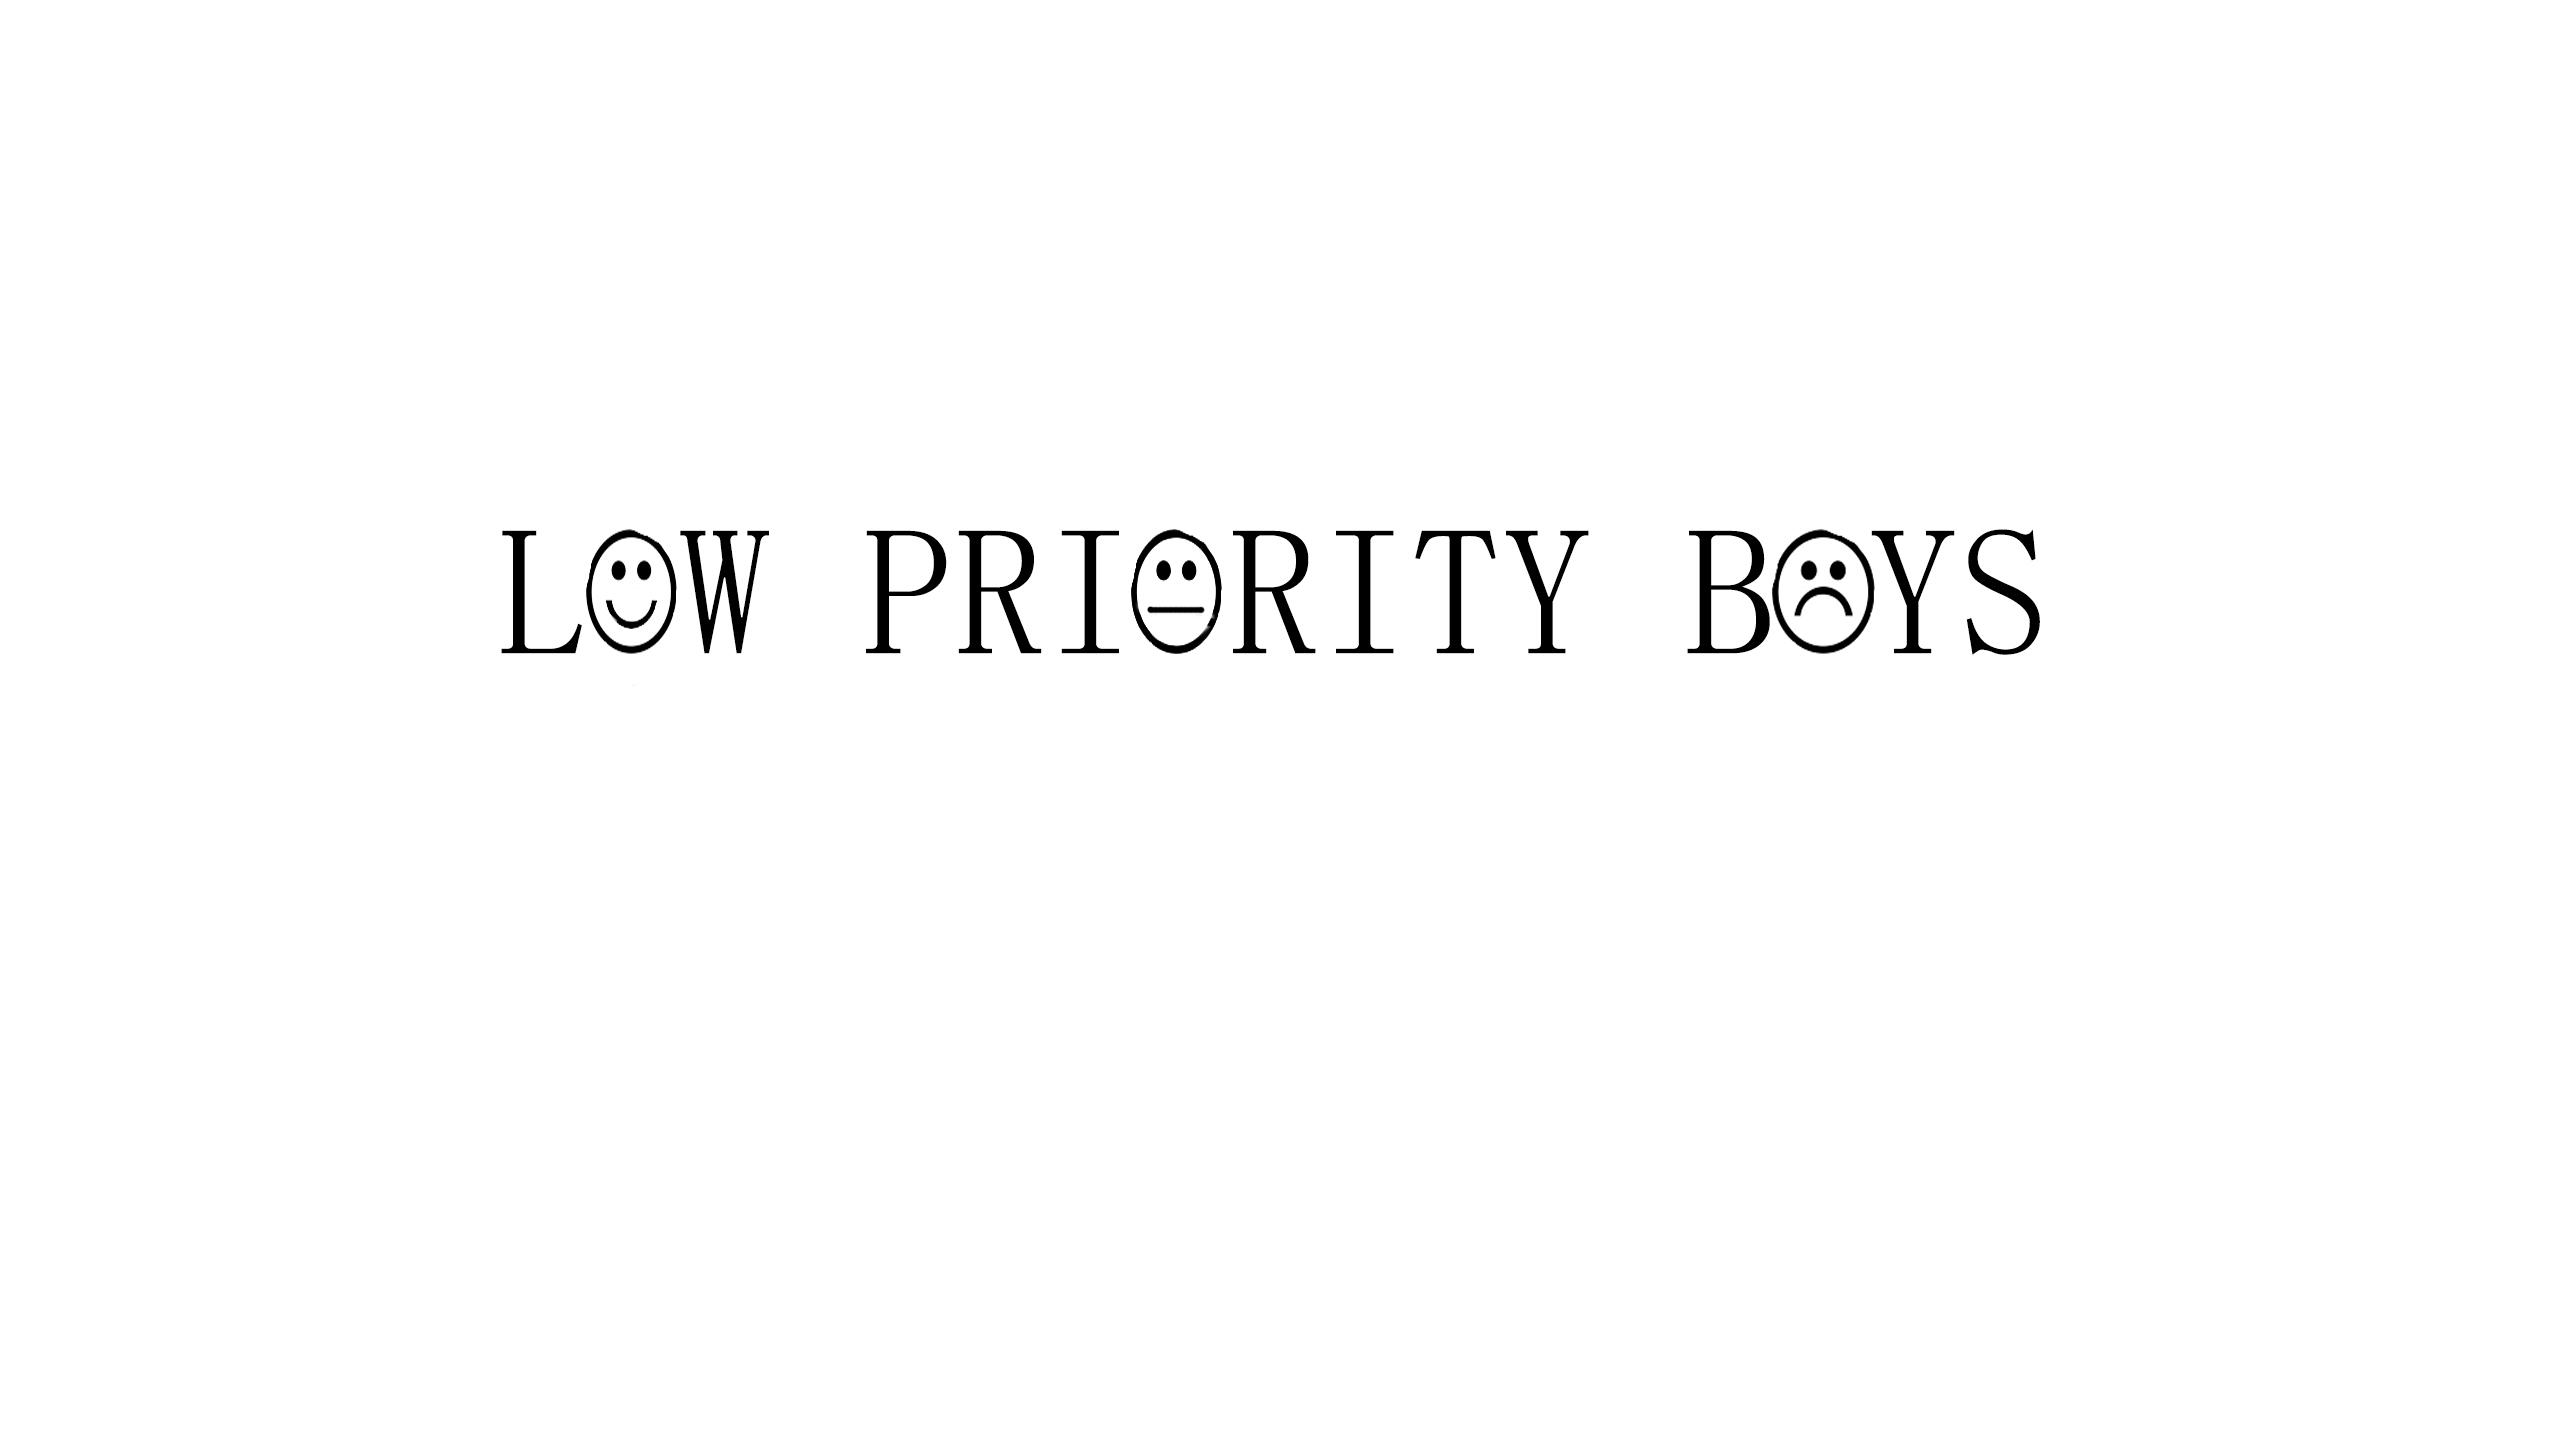 Low  priority boy's